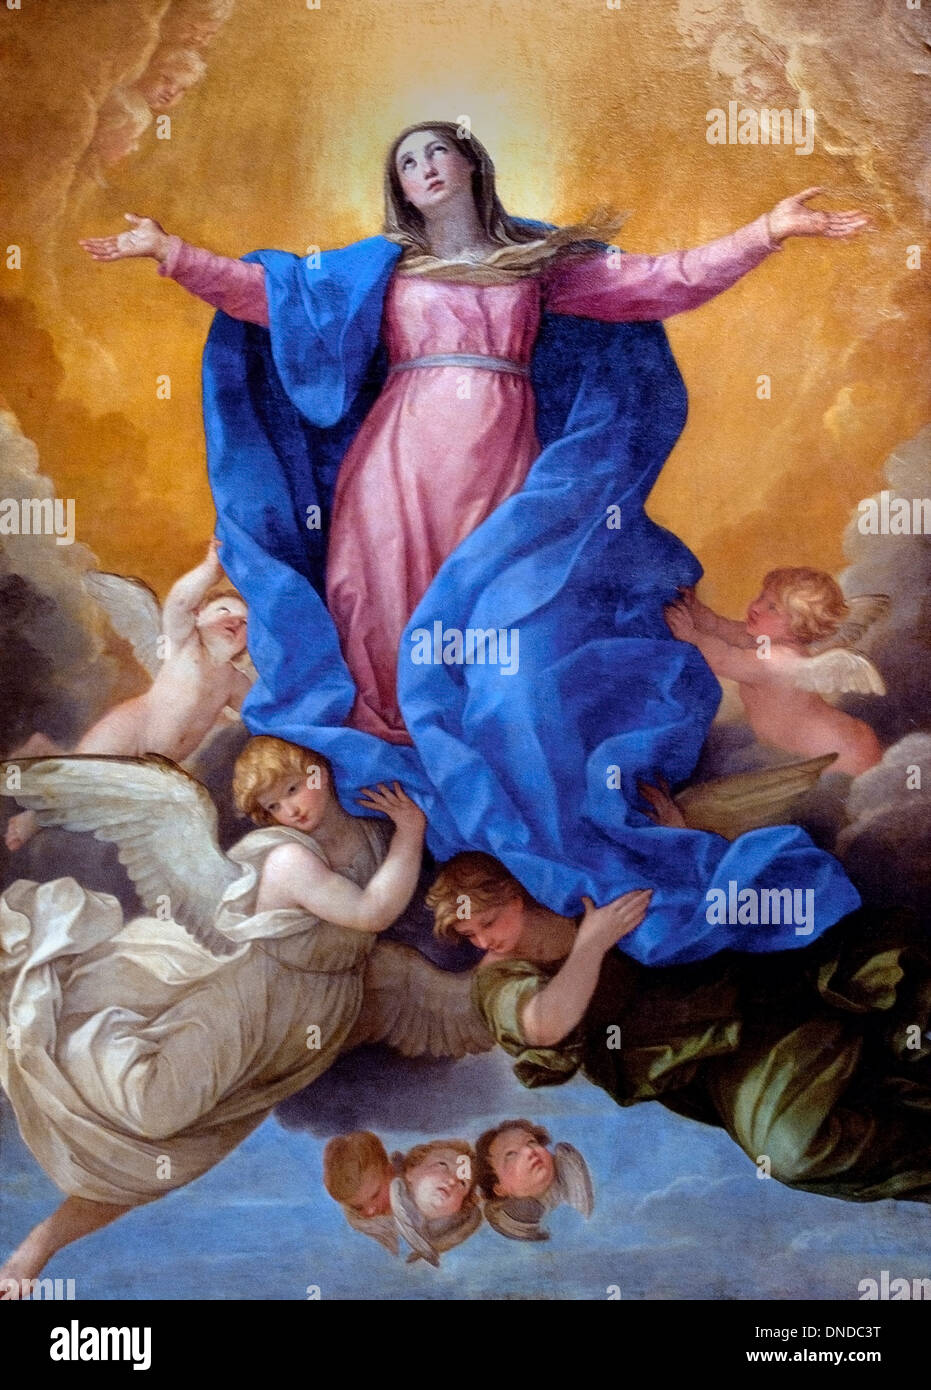 Himmelfahrt  Mariae  - Assumption of Mary by Guido Reni ( Guido Rhenus il Guido ) 1575-1642 Italy Italian Stock Photo